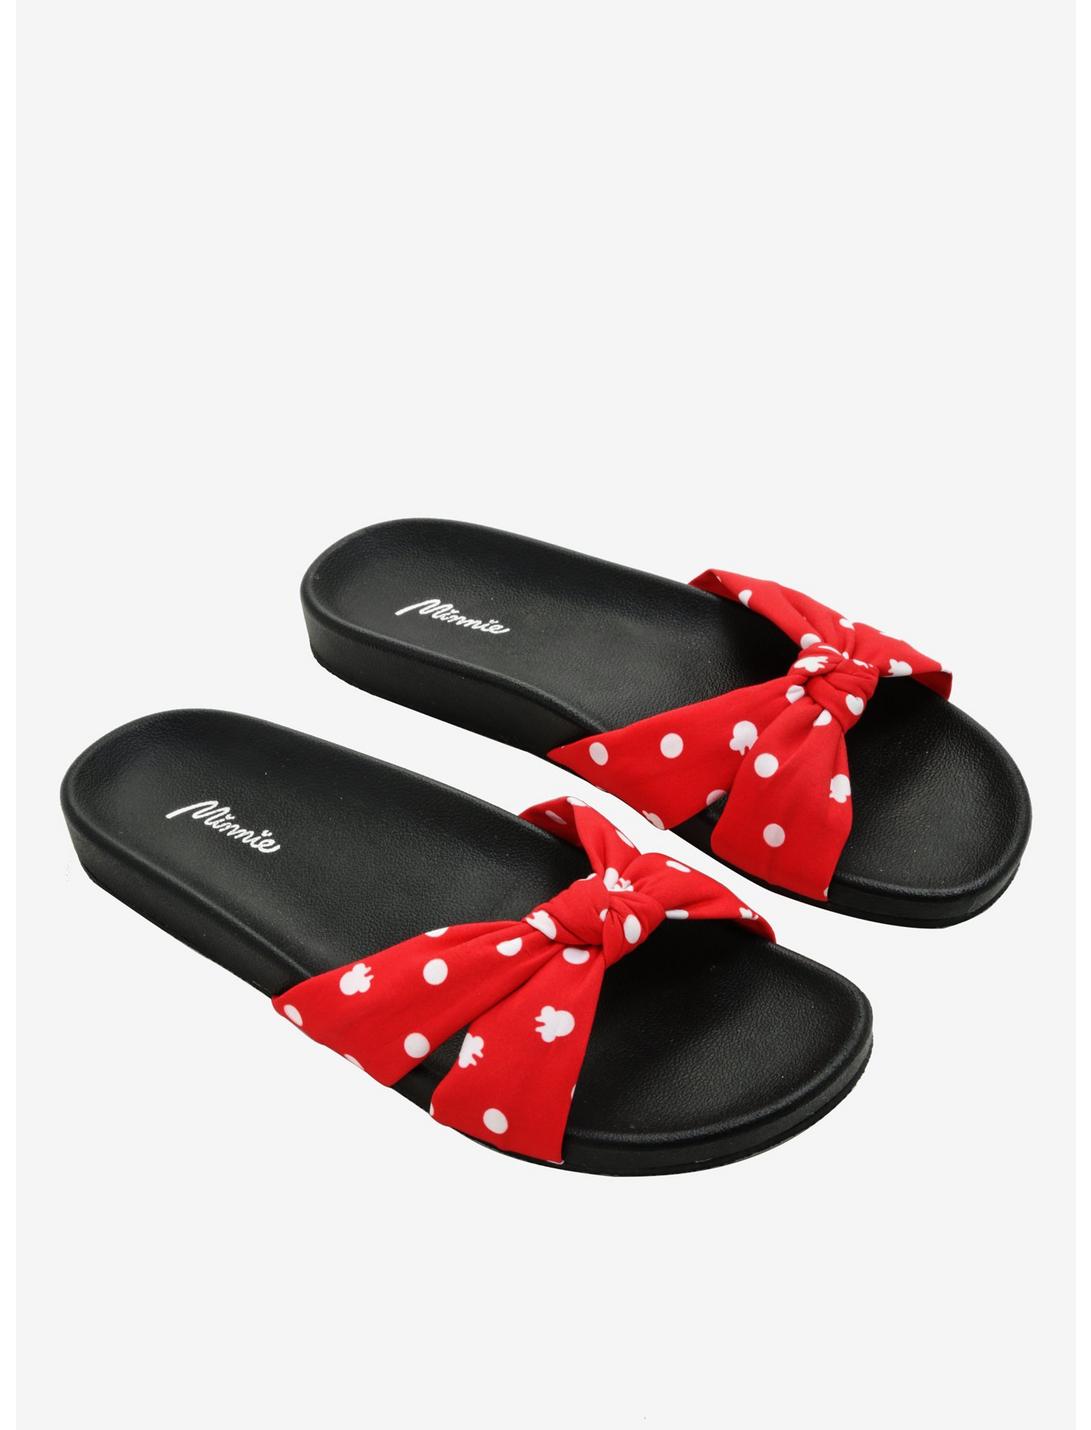 Disney Minnie Mouse Polka Dot Sandals, MULTI, hi-res